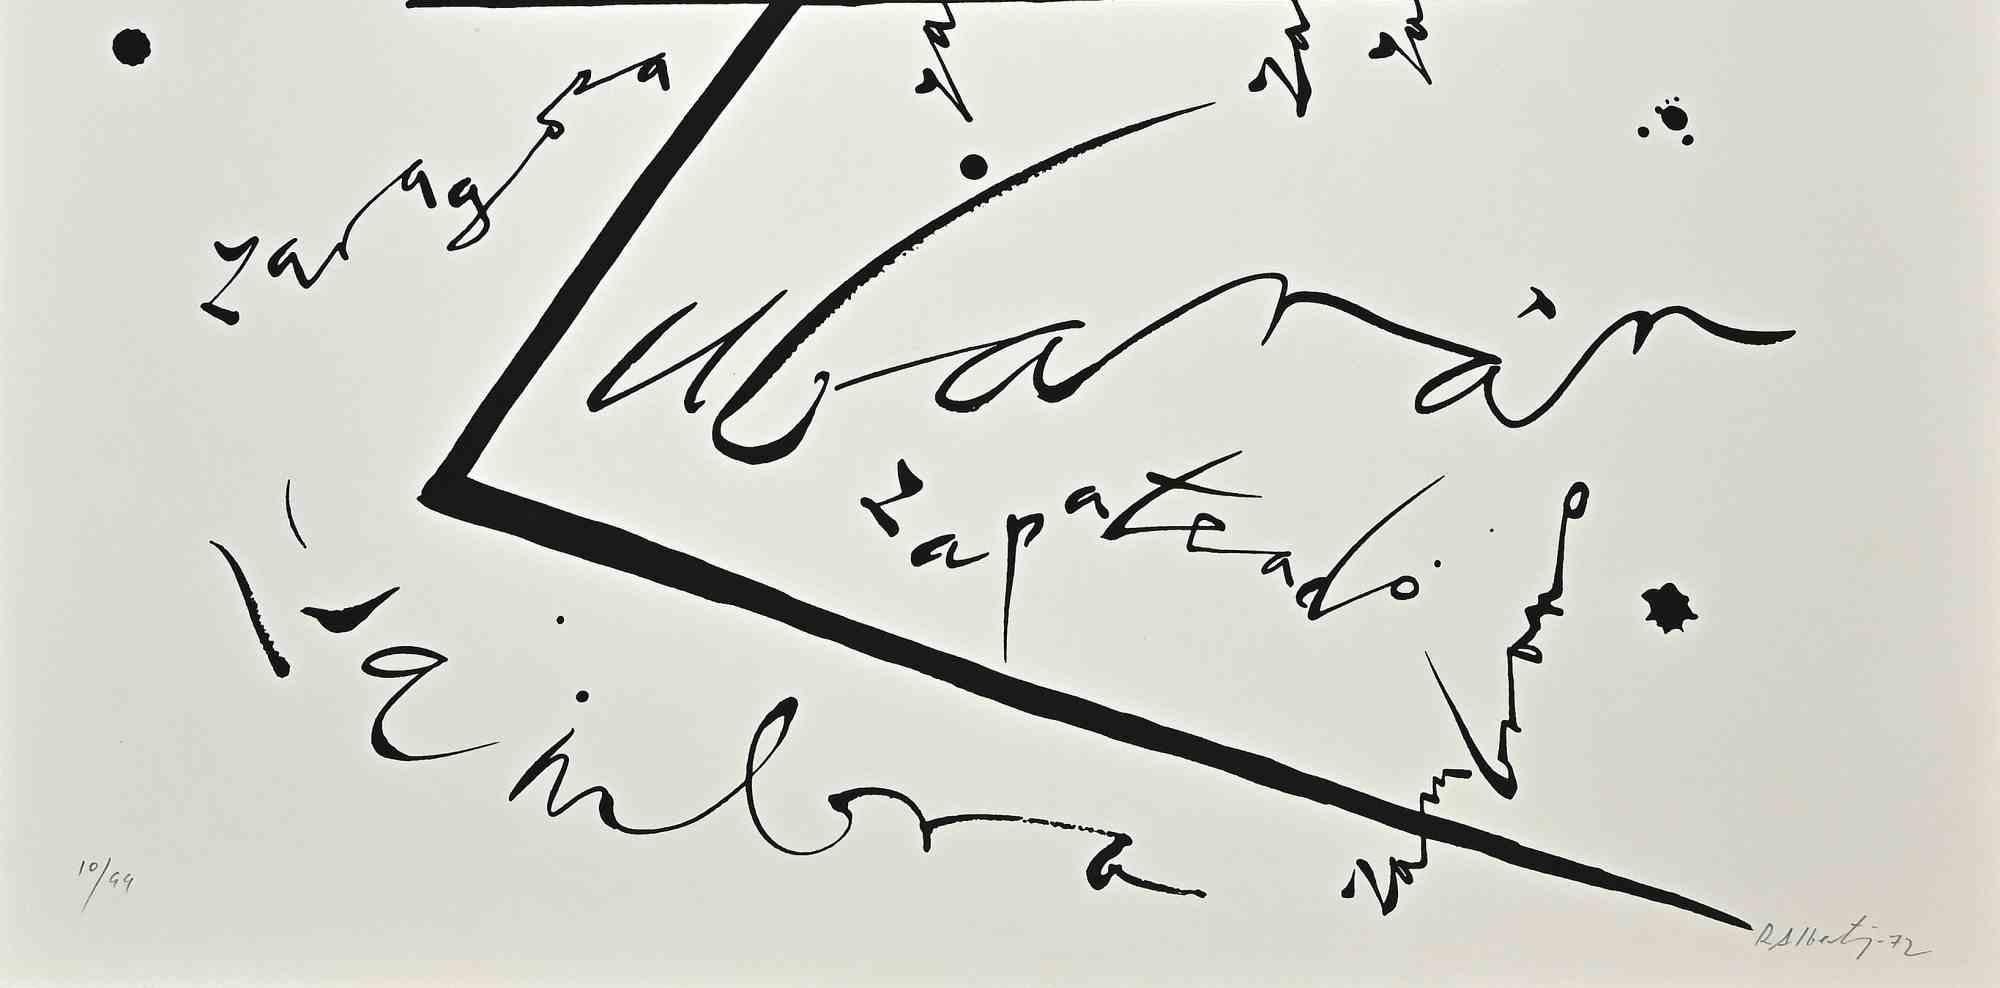 Letter Z  -  Lithograph by Rafael Alberti - 1972 For Sale 1